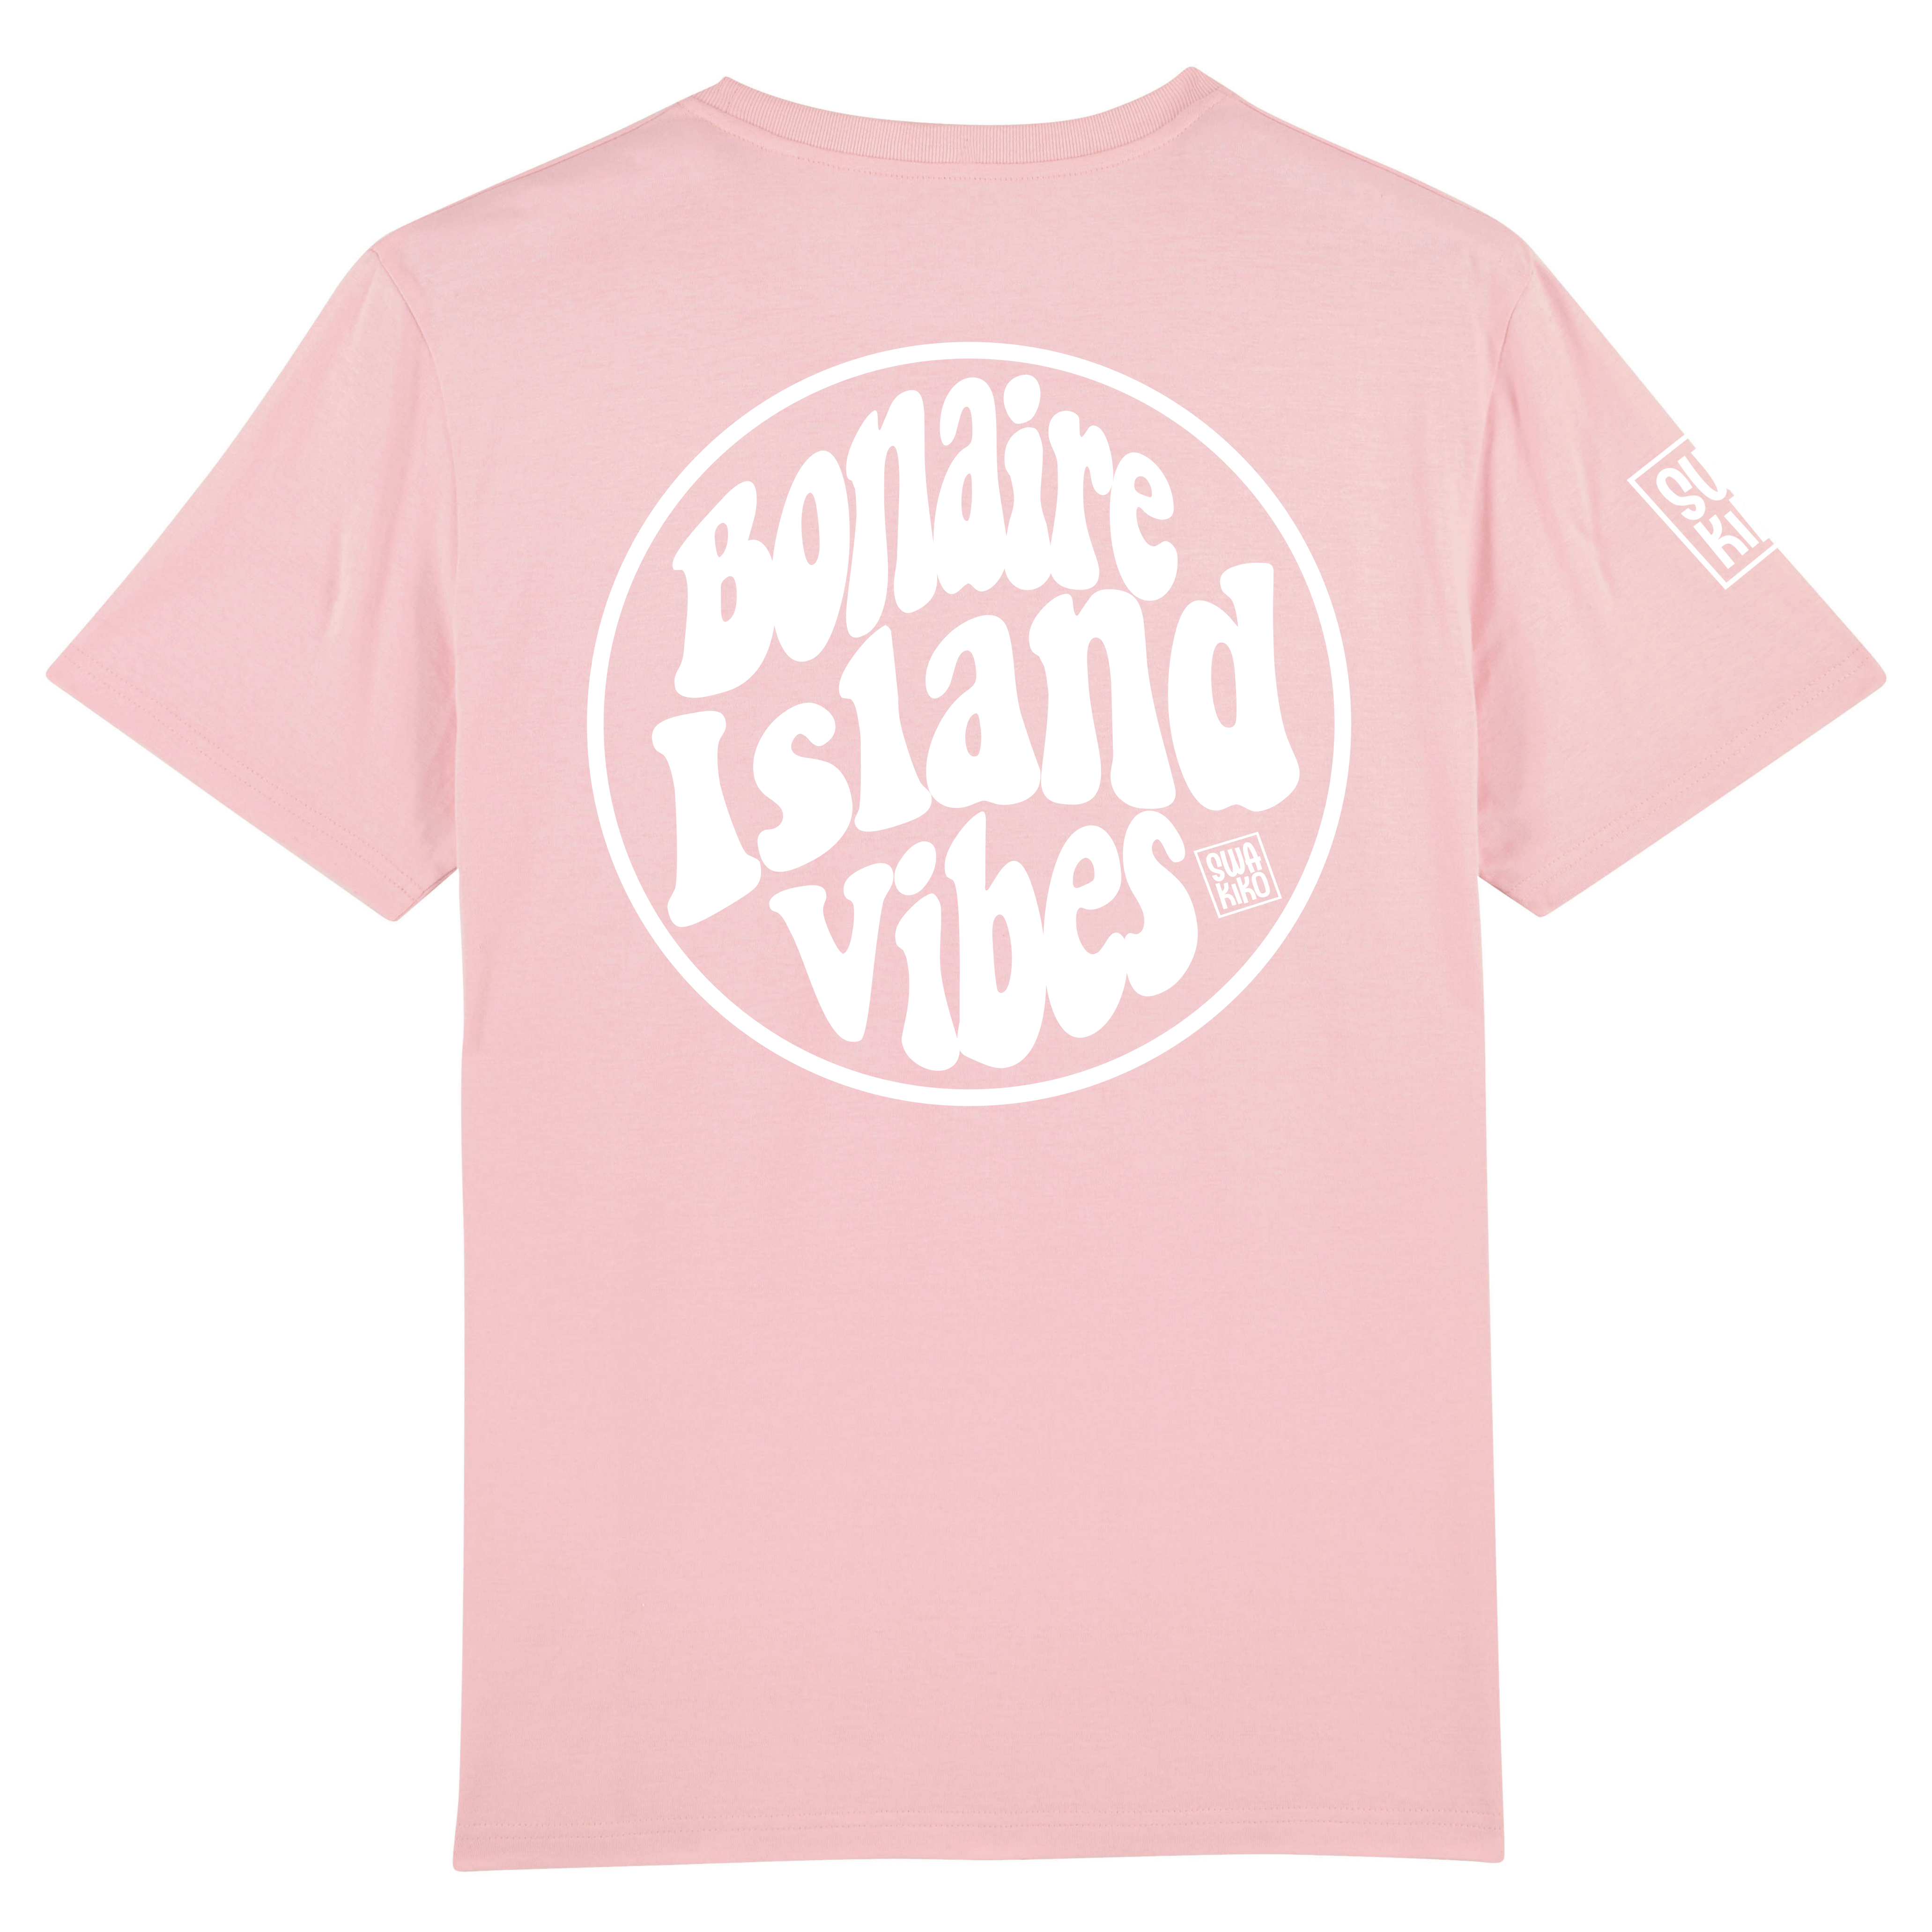 Bonaire Island Vibes, pink T-shirt